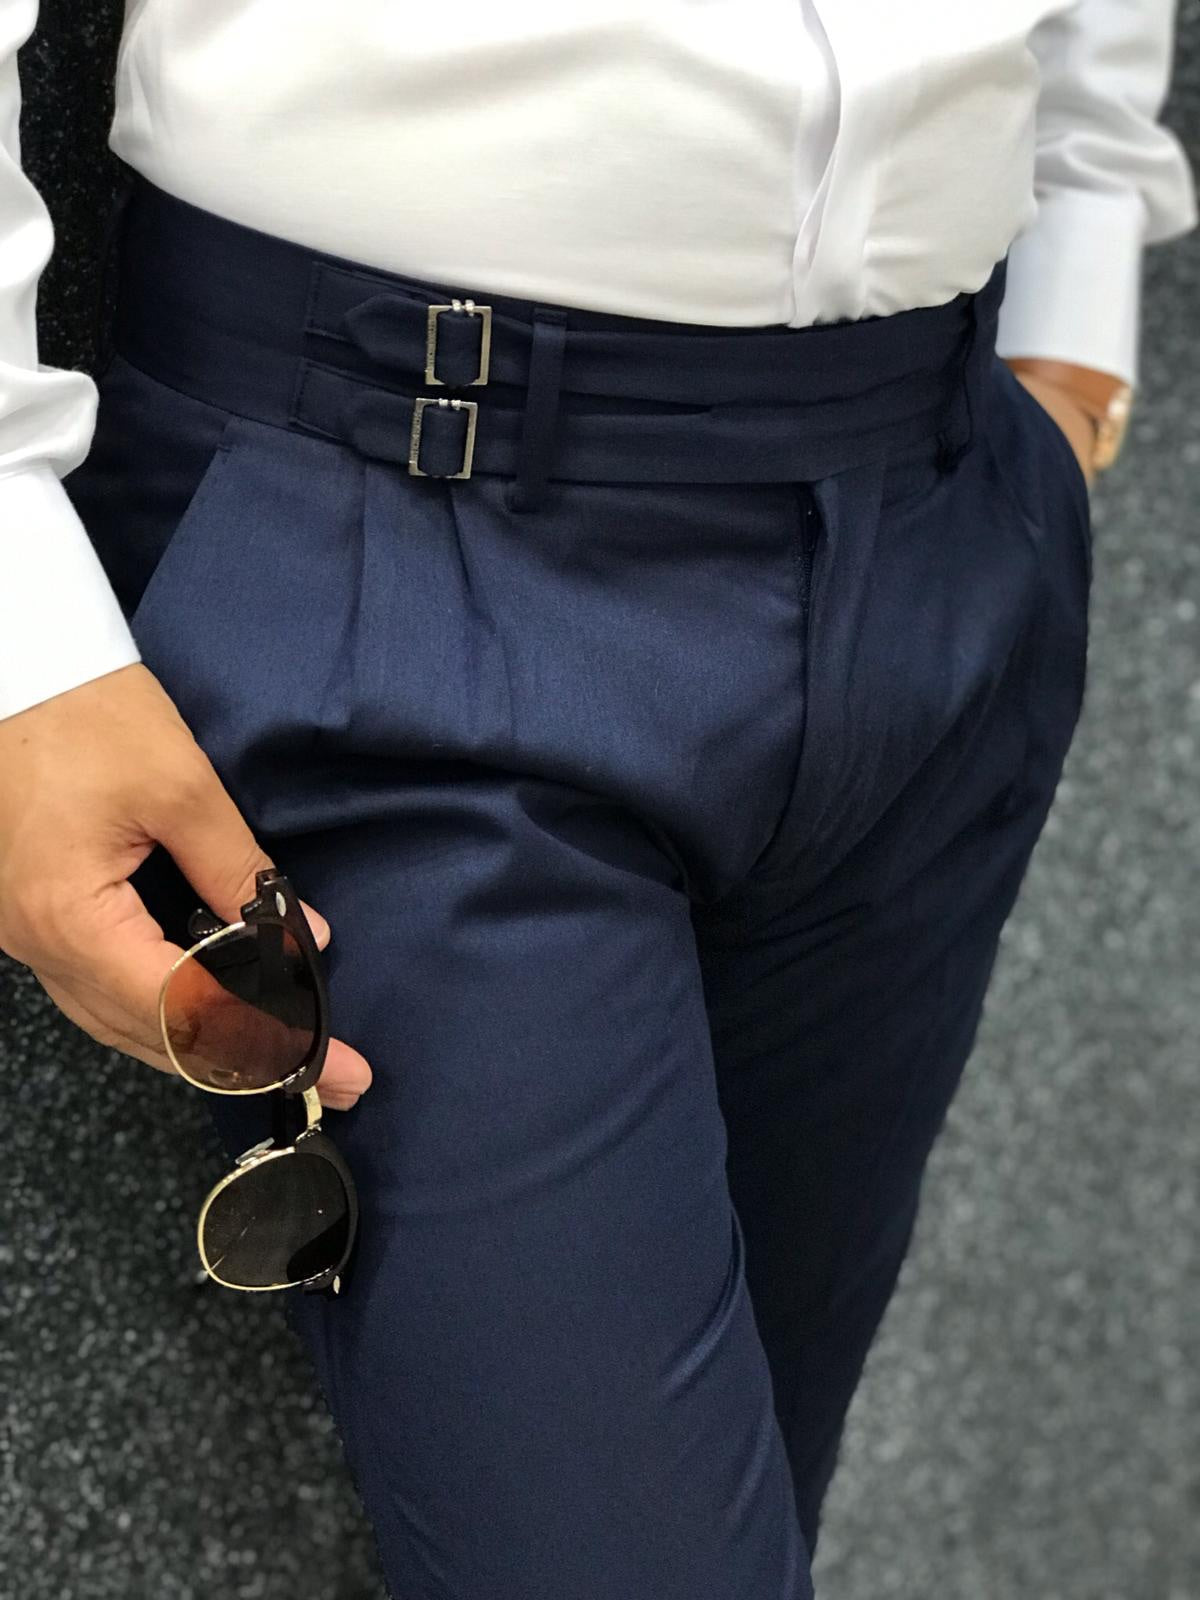 Versus Versace Dark Blue Pleated Pants for Men Online India at Darveys.com